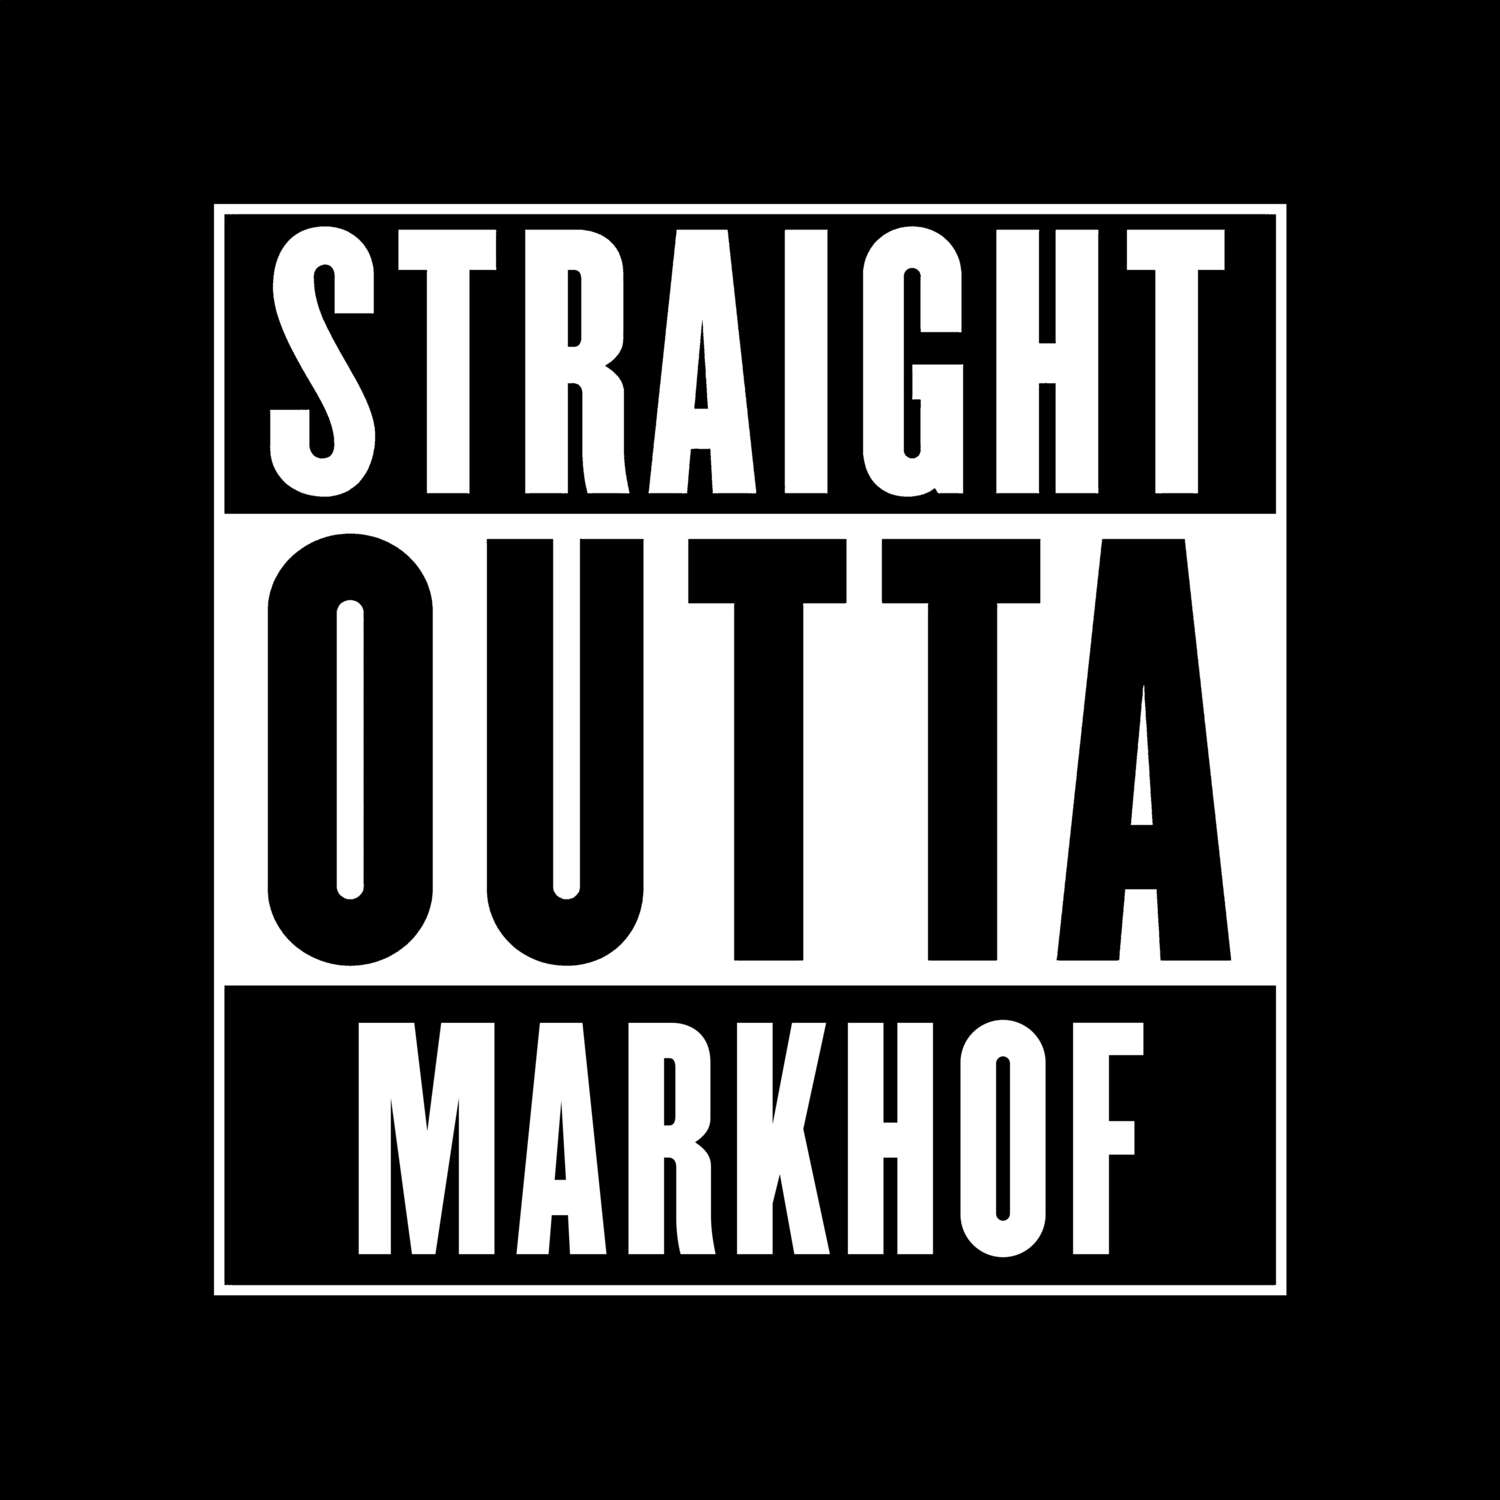 Markhof T-Shirt »Straight Outta«